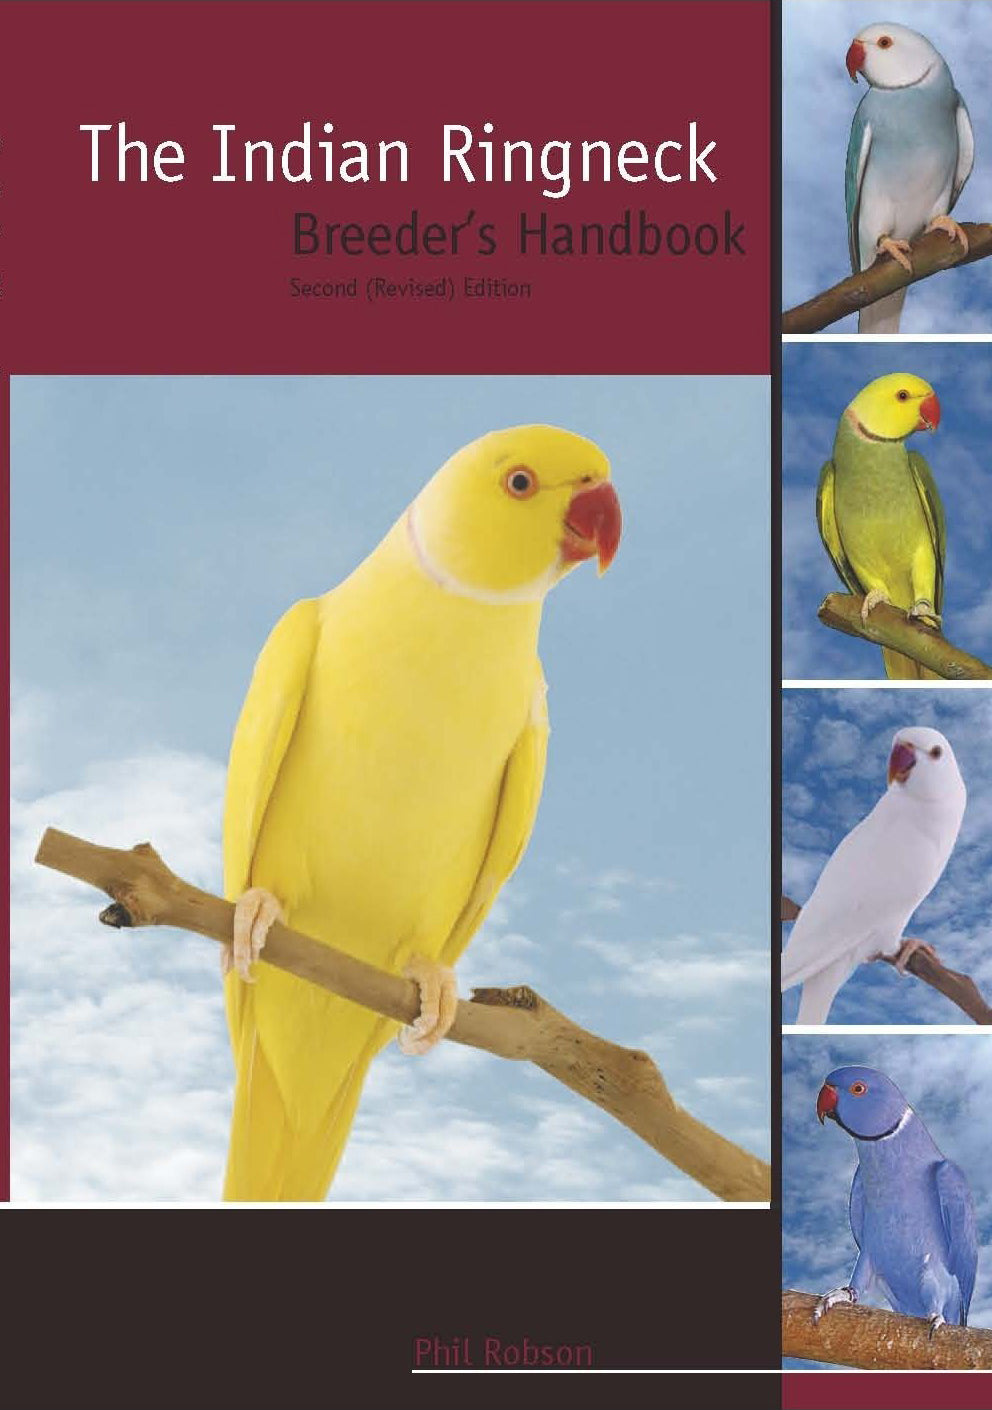 The Indian Ringneck Breeders Handbook (Revised Edition)